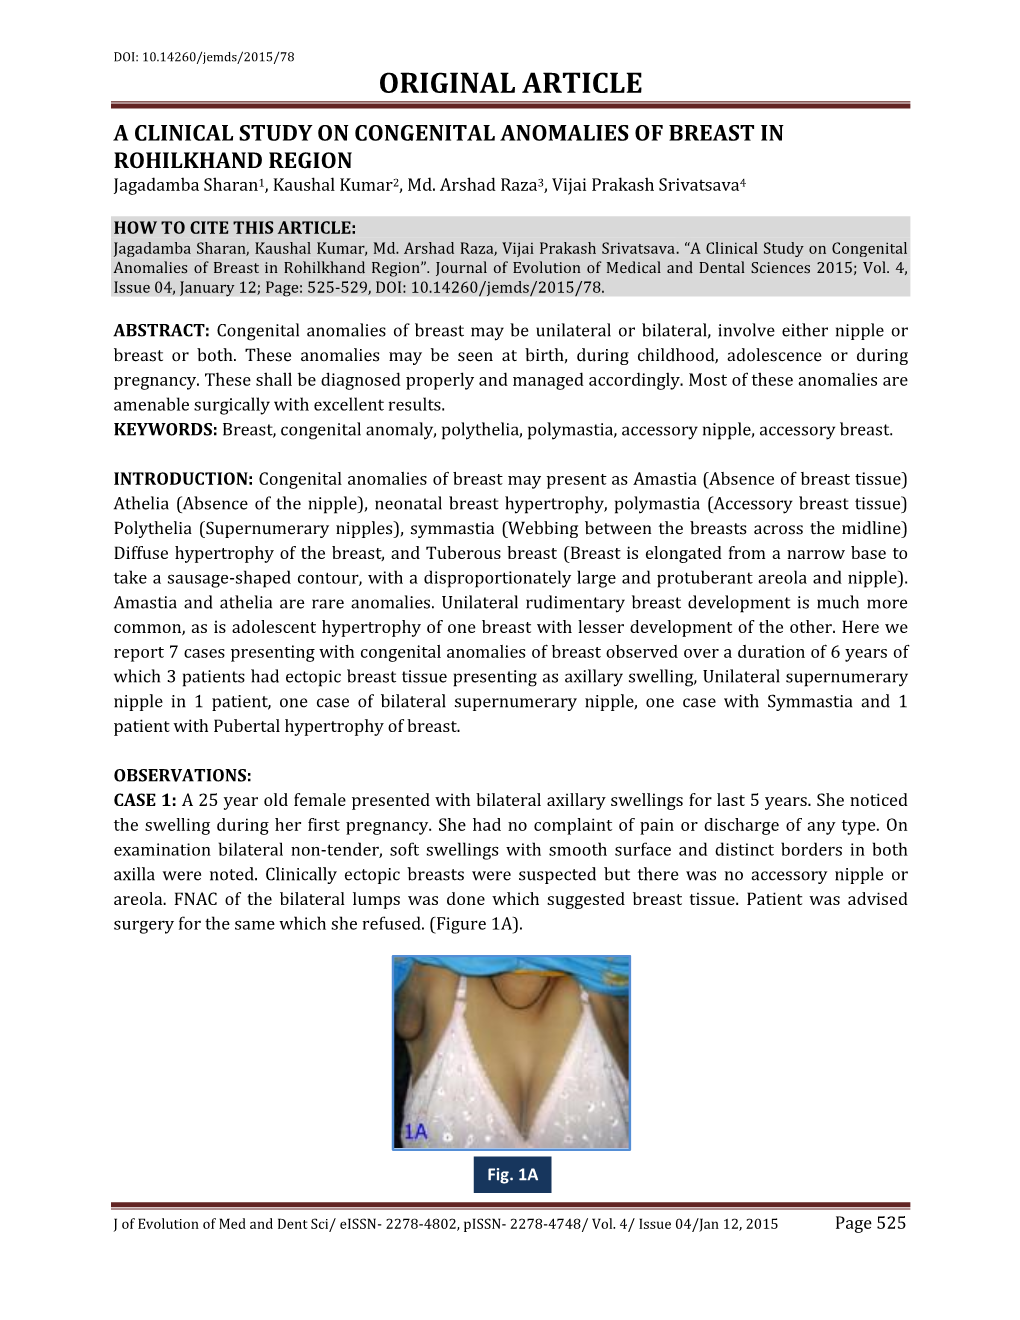 ORIGINAL ARTICLE a CLINICAL STUDY on CONGENITAL ANOMALIES of BREAST in ROHILKHAND REGION Jagadamba Sharan1, Kaushal Kumar2, Md